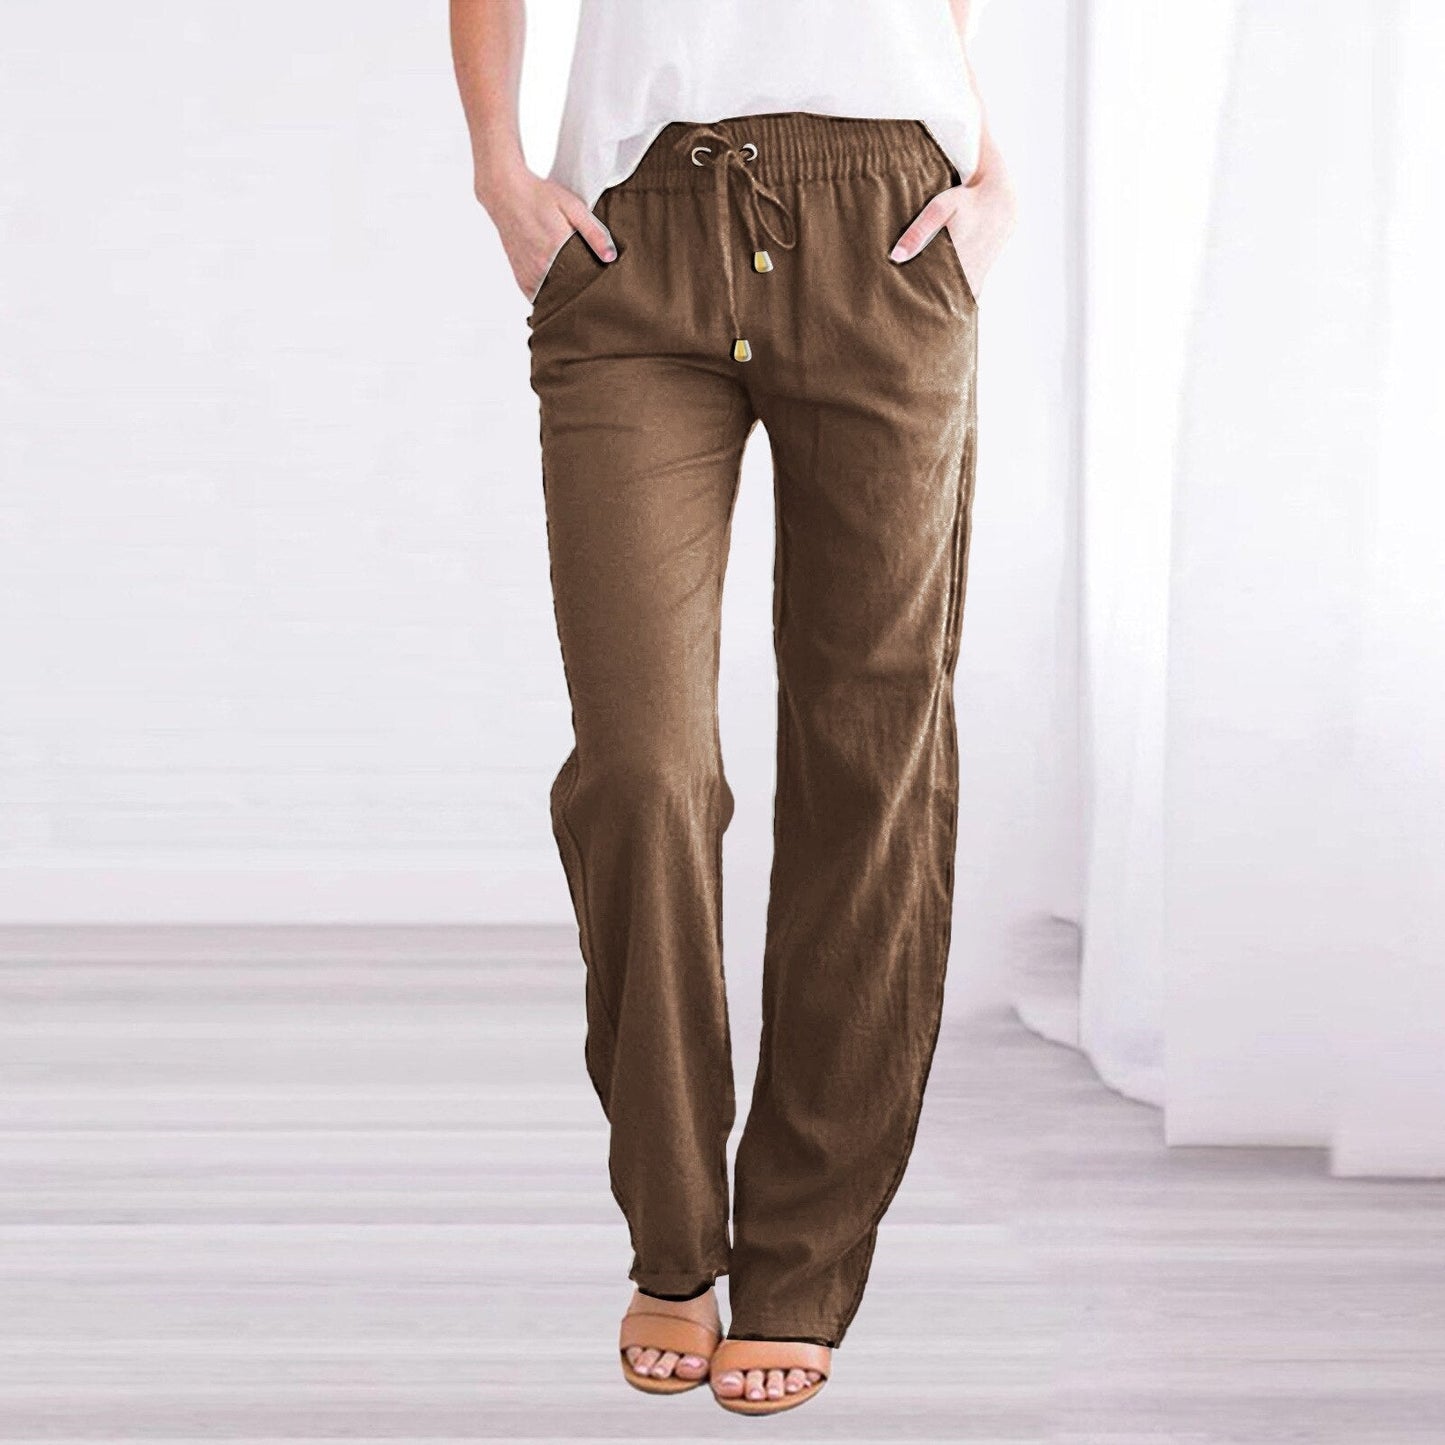 Soft Surroundings women's tan button side pants size small